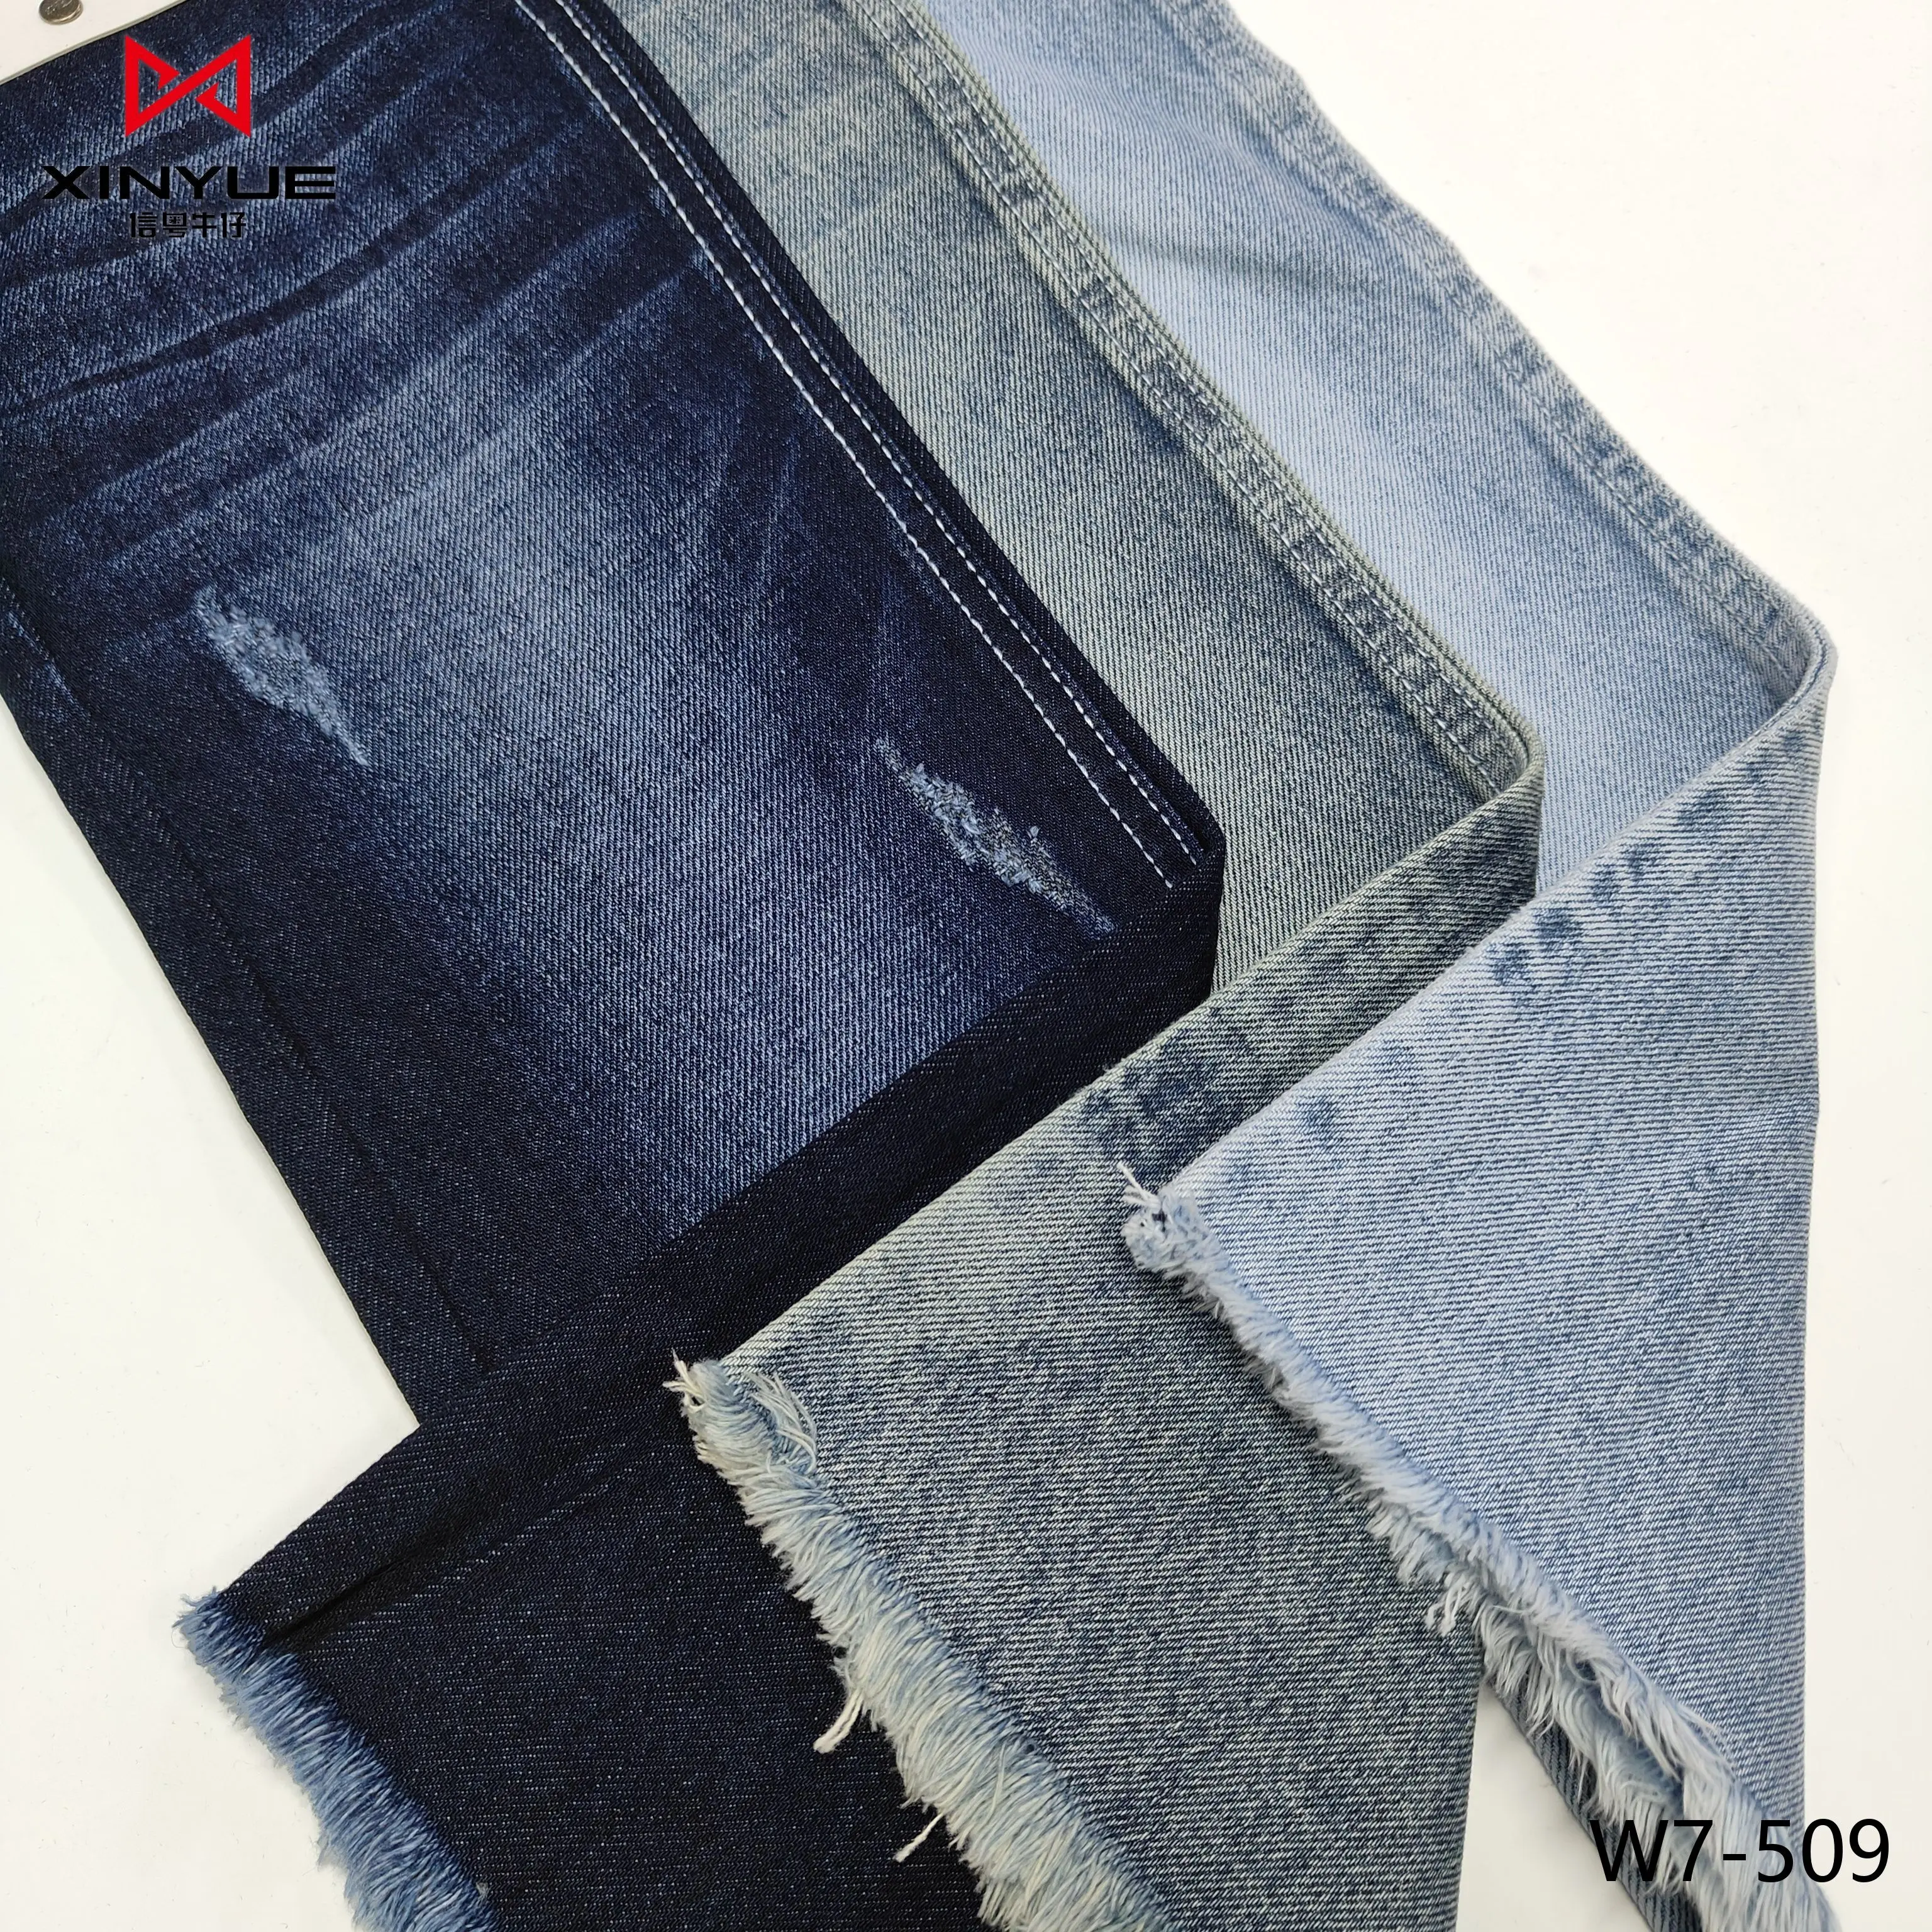 W7-509 Baumwolle Polyester dged Stil urban Star Jeans Diesel Jeans Stoff